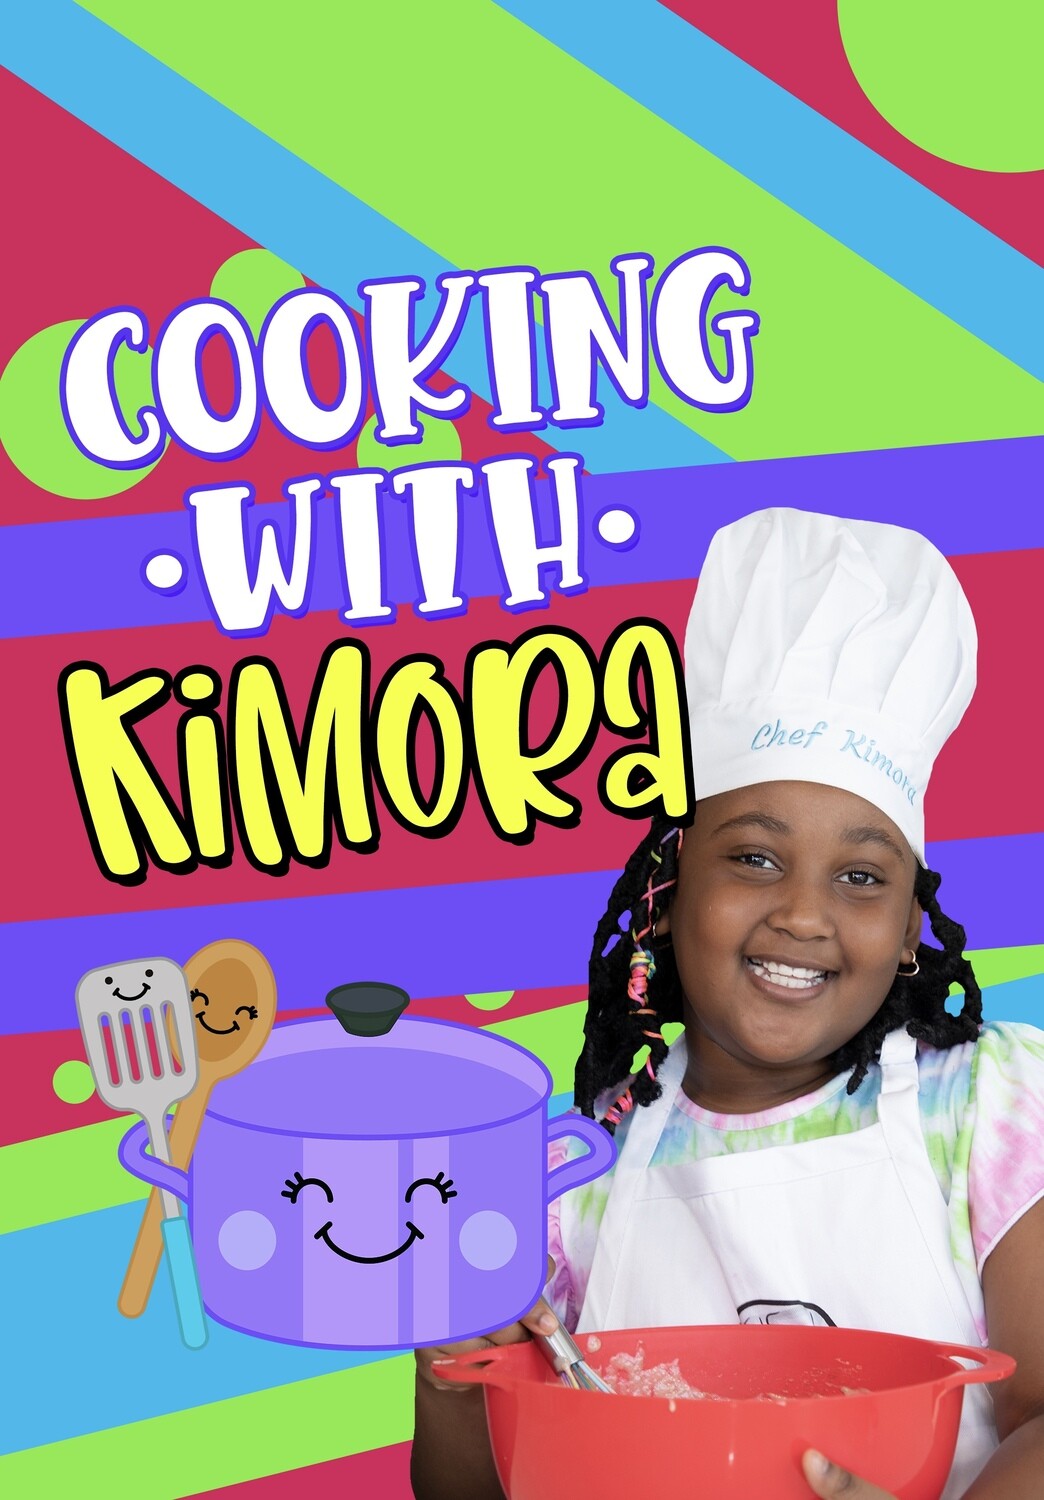 Cooking with Kimora Kit (4 Items)